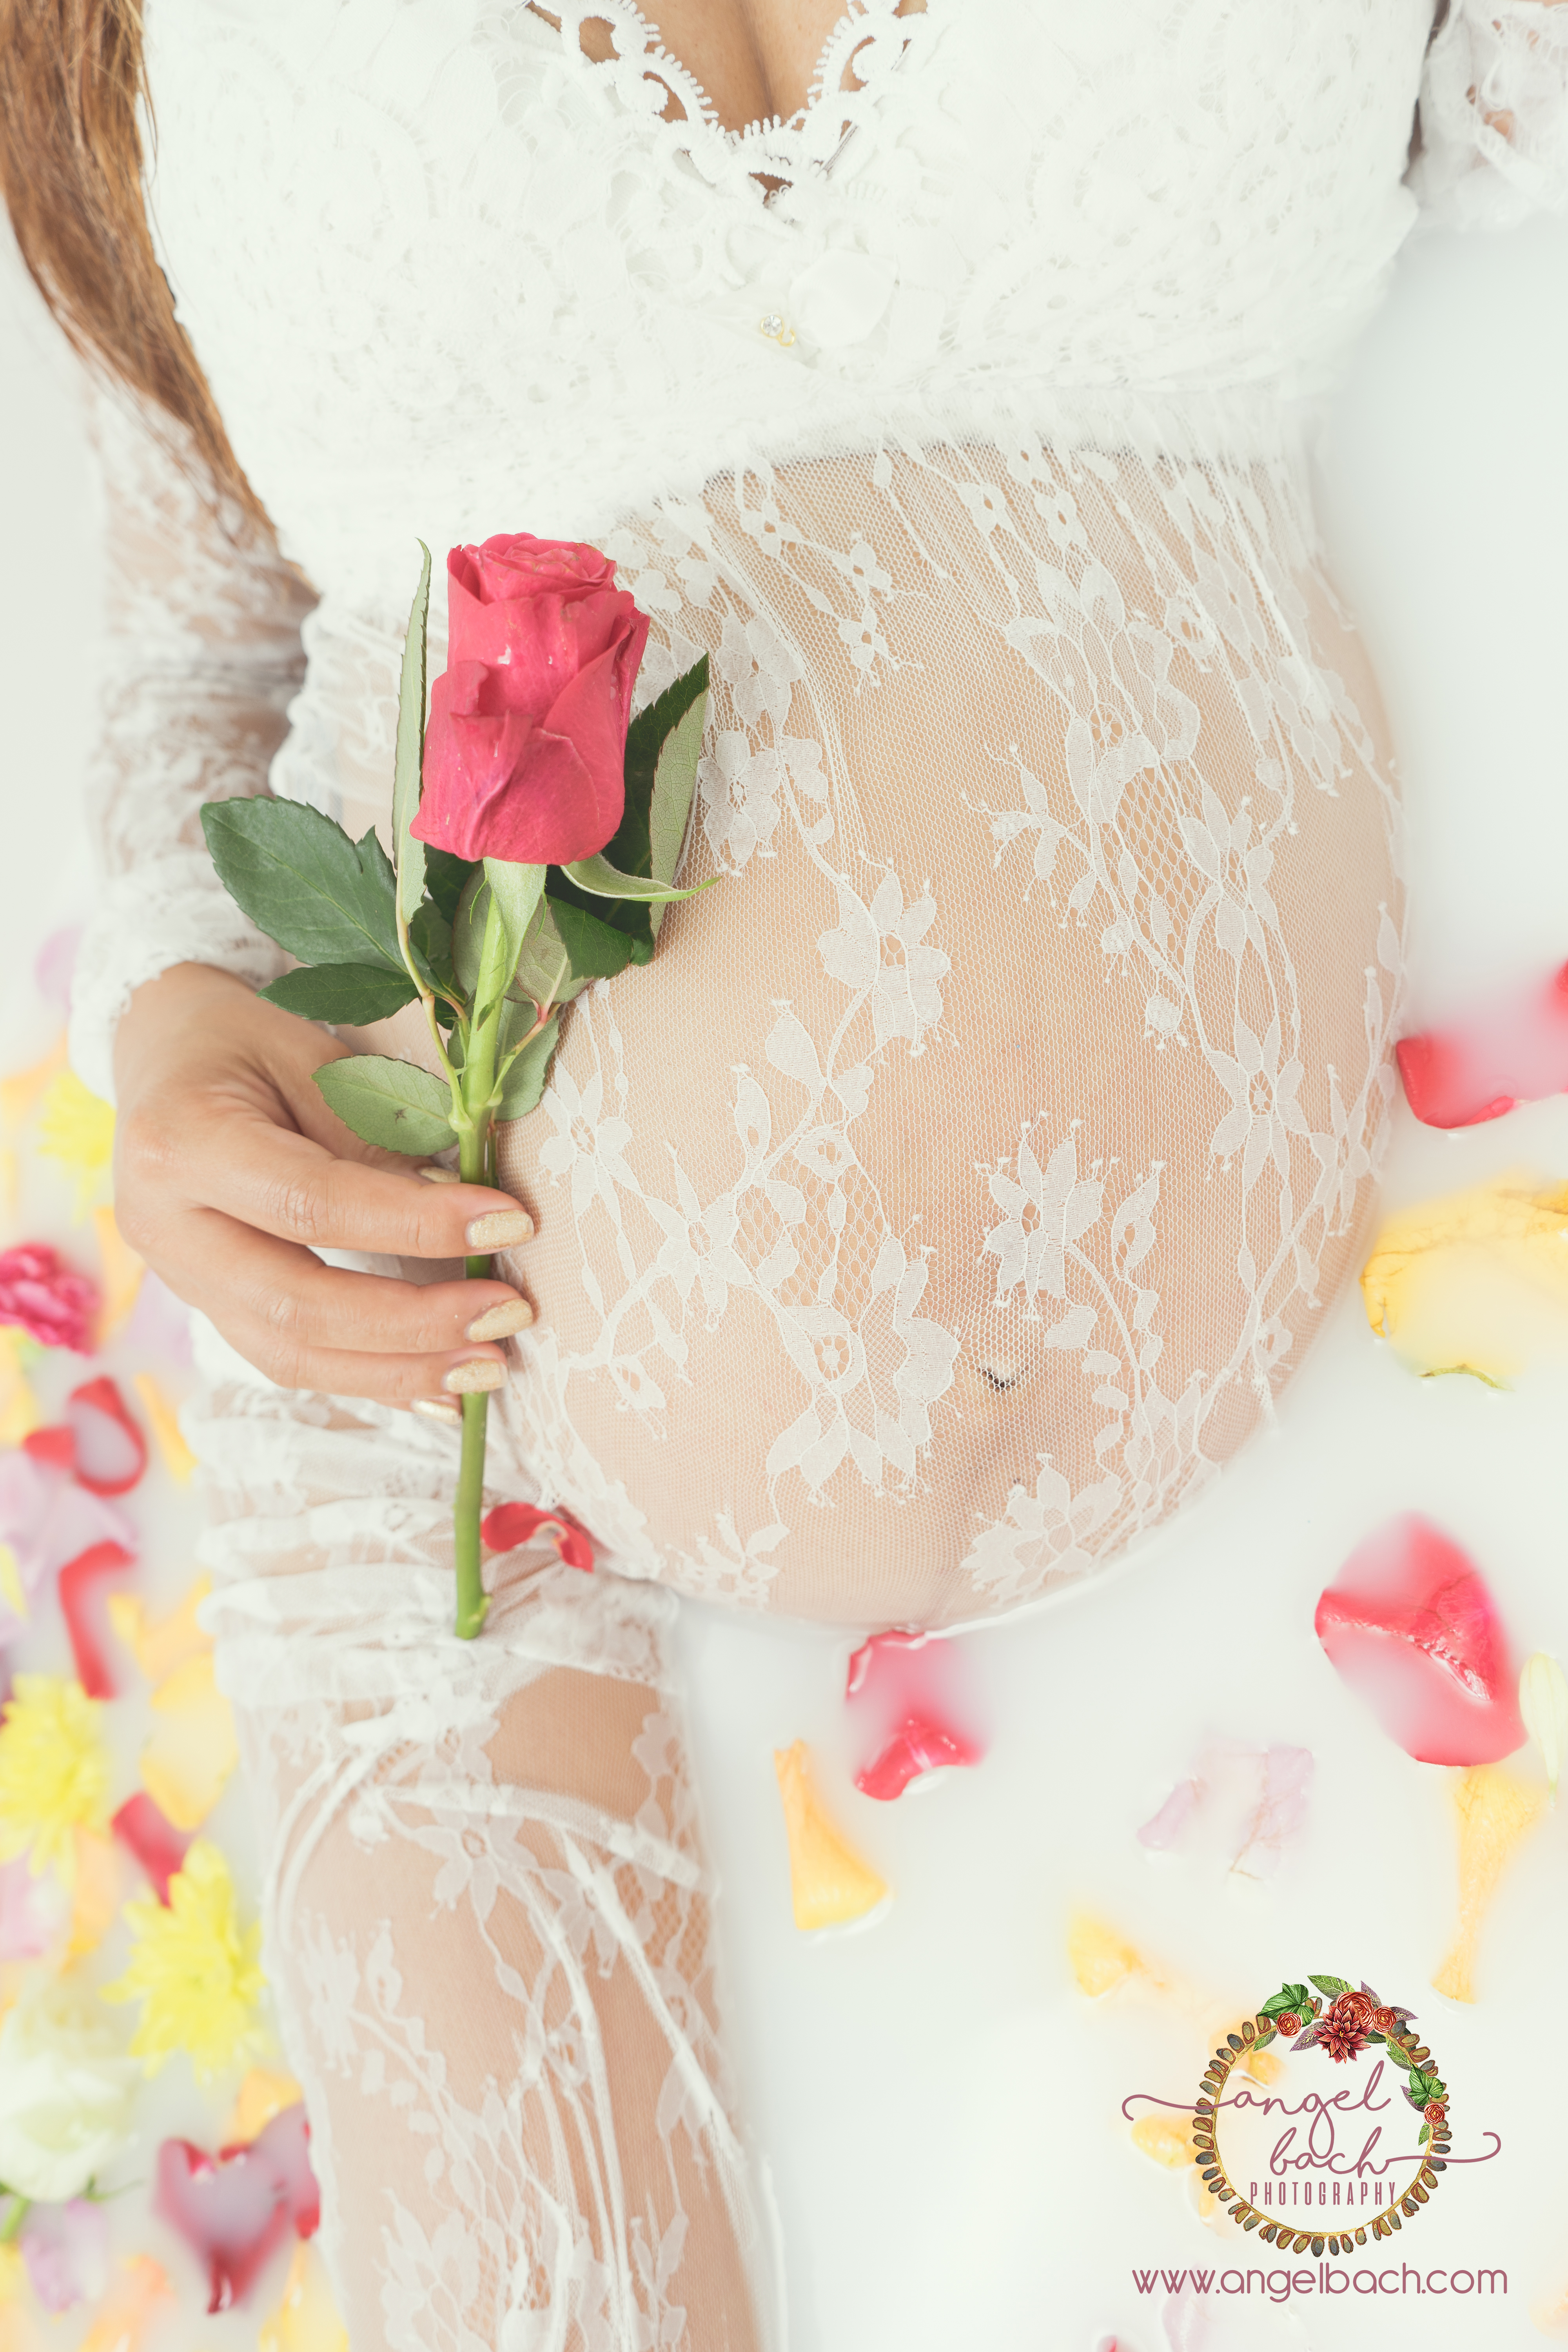 Milk Bath, Rose Bath,  Maternity Photoshoot, Pregnancy, 34 weeks pregnant, pinay mom, Fairy pregnant, Flower crown, Beautiful Pregnant, Photography, pregnancy glow